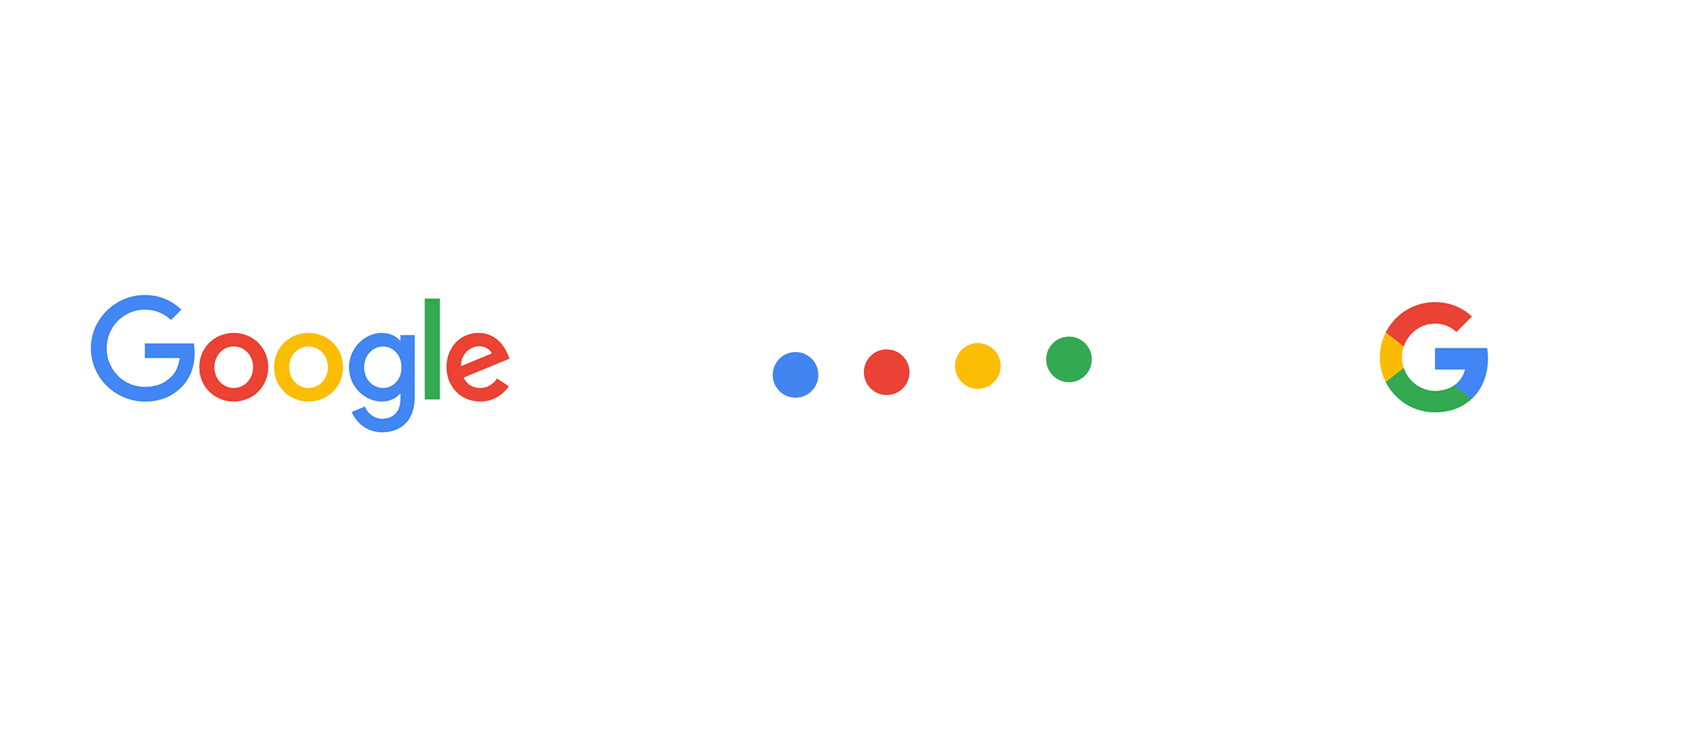 Google's First Logo - Evolving the Google Identity - Library - Google Design